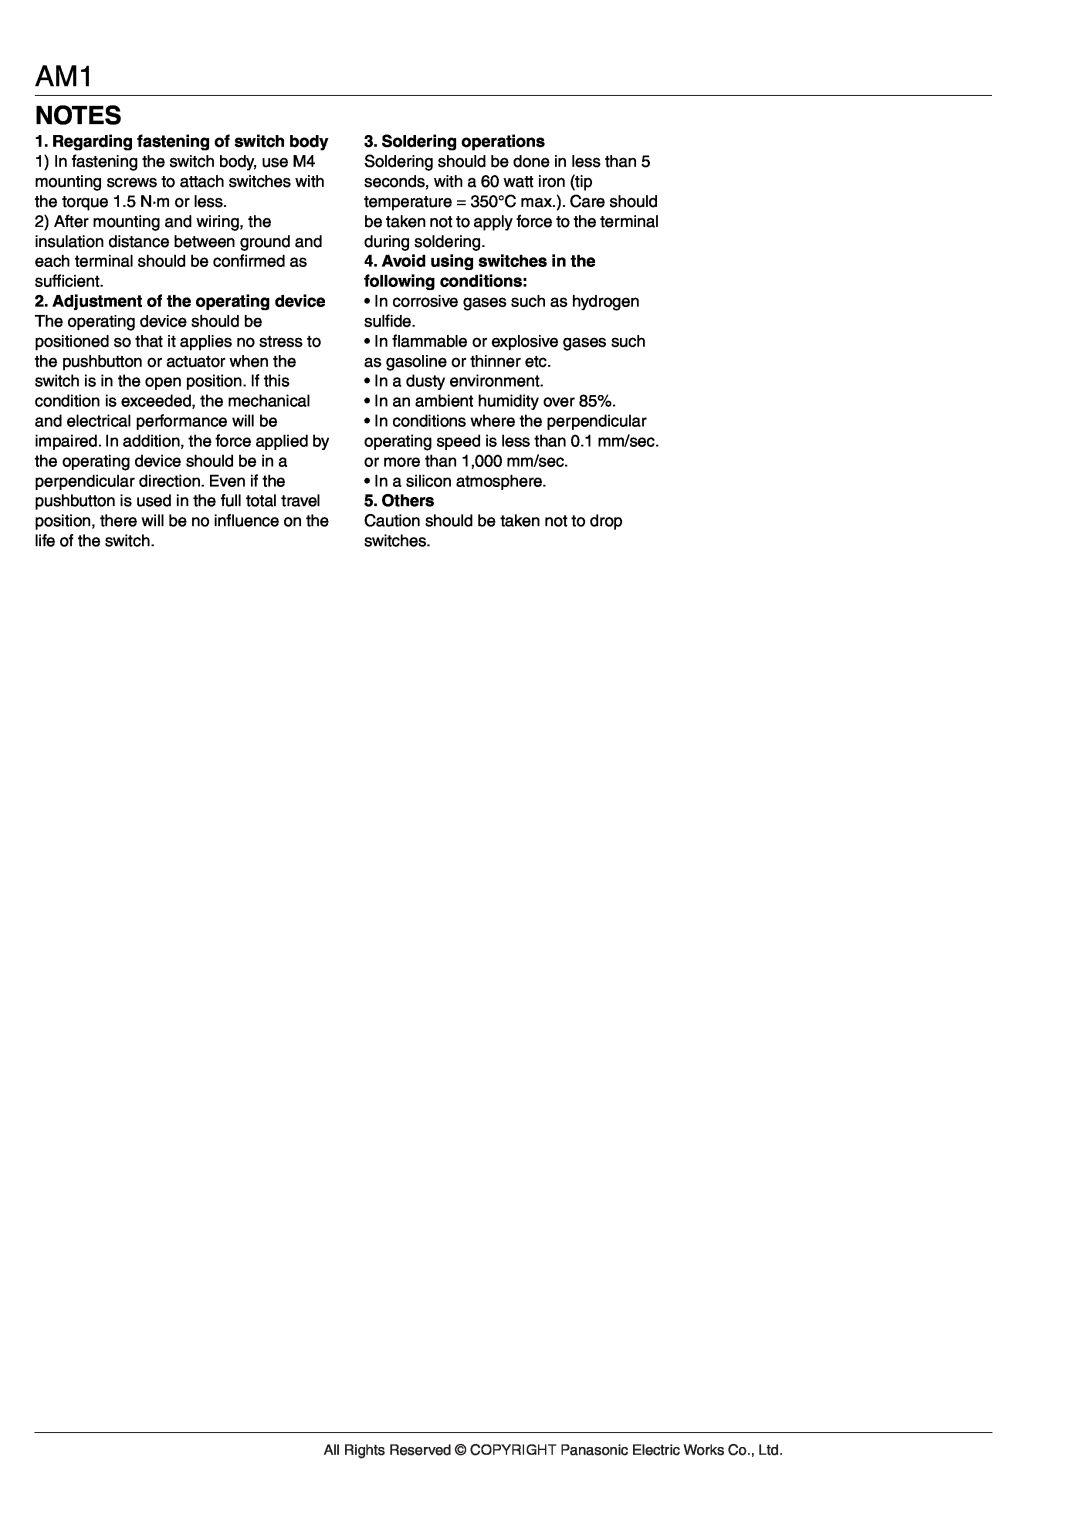 Panasonic AM1 (NZ BASIC) specifications Regarding fastening of switch body 